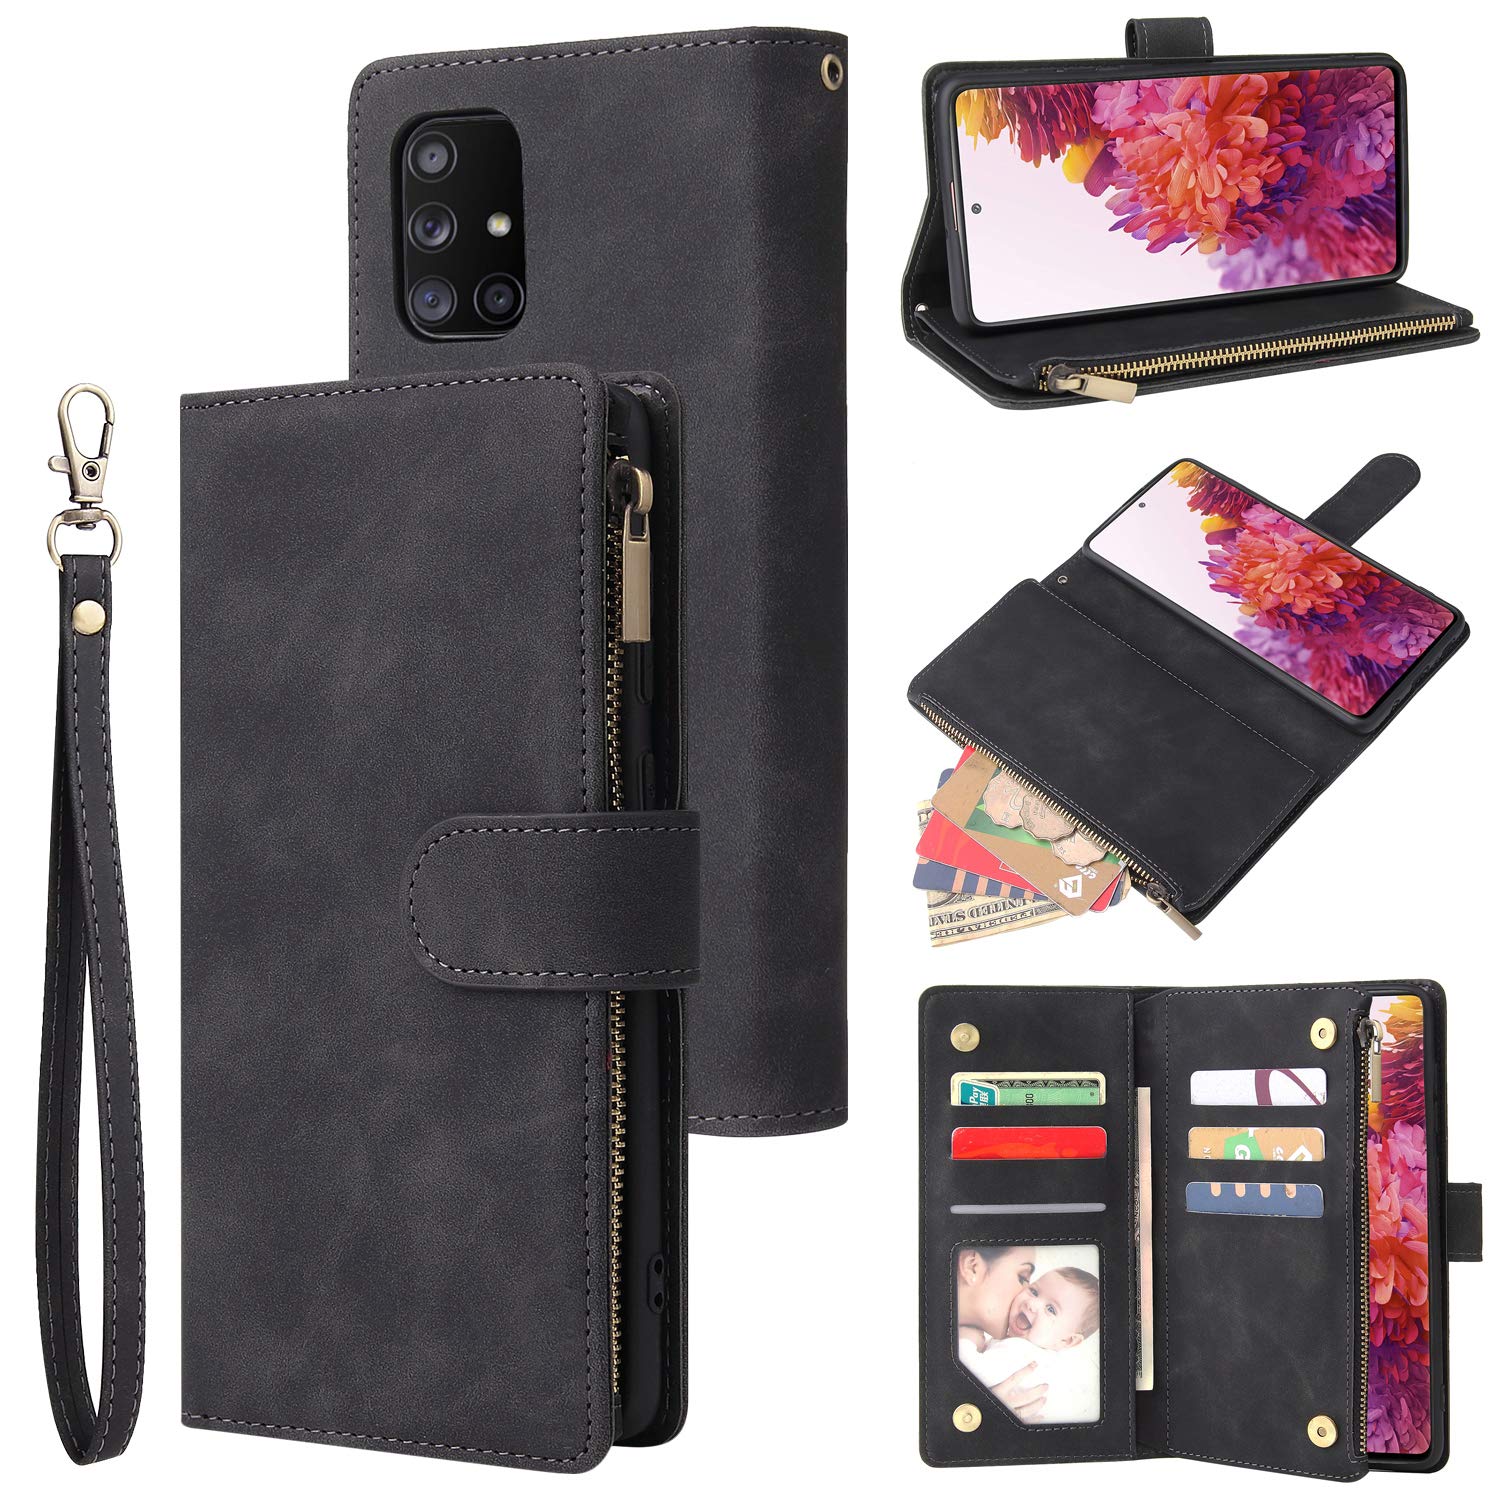 Lbyzcase Phone Case For Galaxy S20 Plus,Samsung S20+ 5G Wallet Case,Luxury Folio Flip Leather Coverzipper Pocket]Wrist Strap]Kic